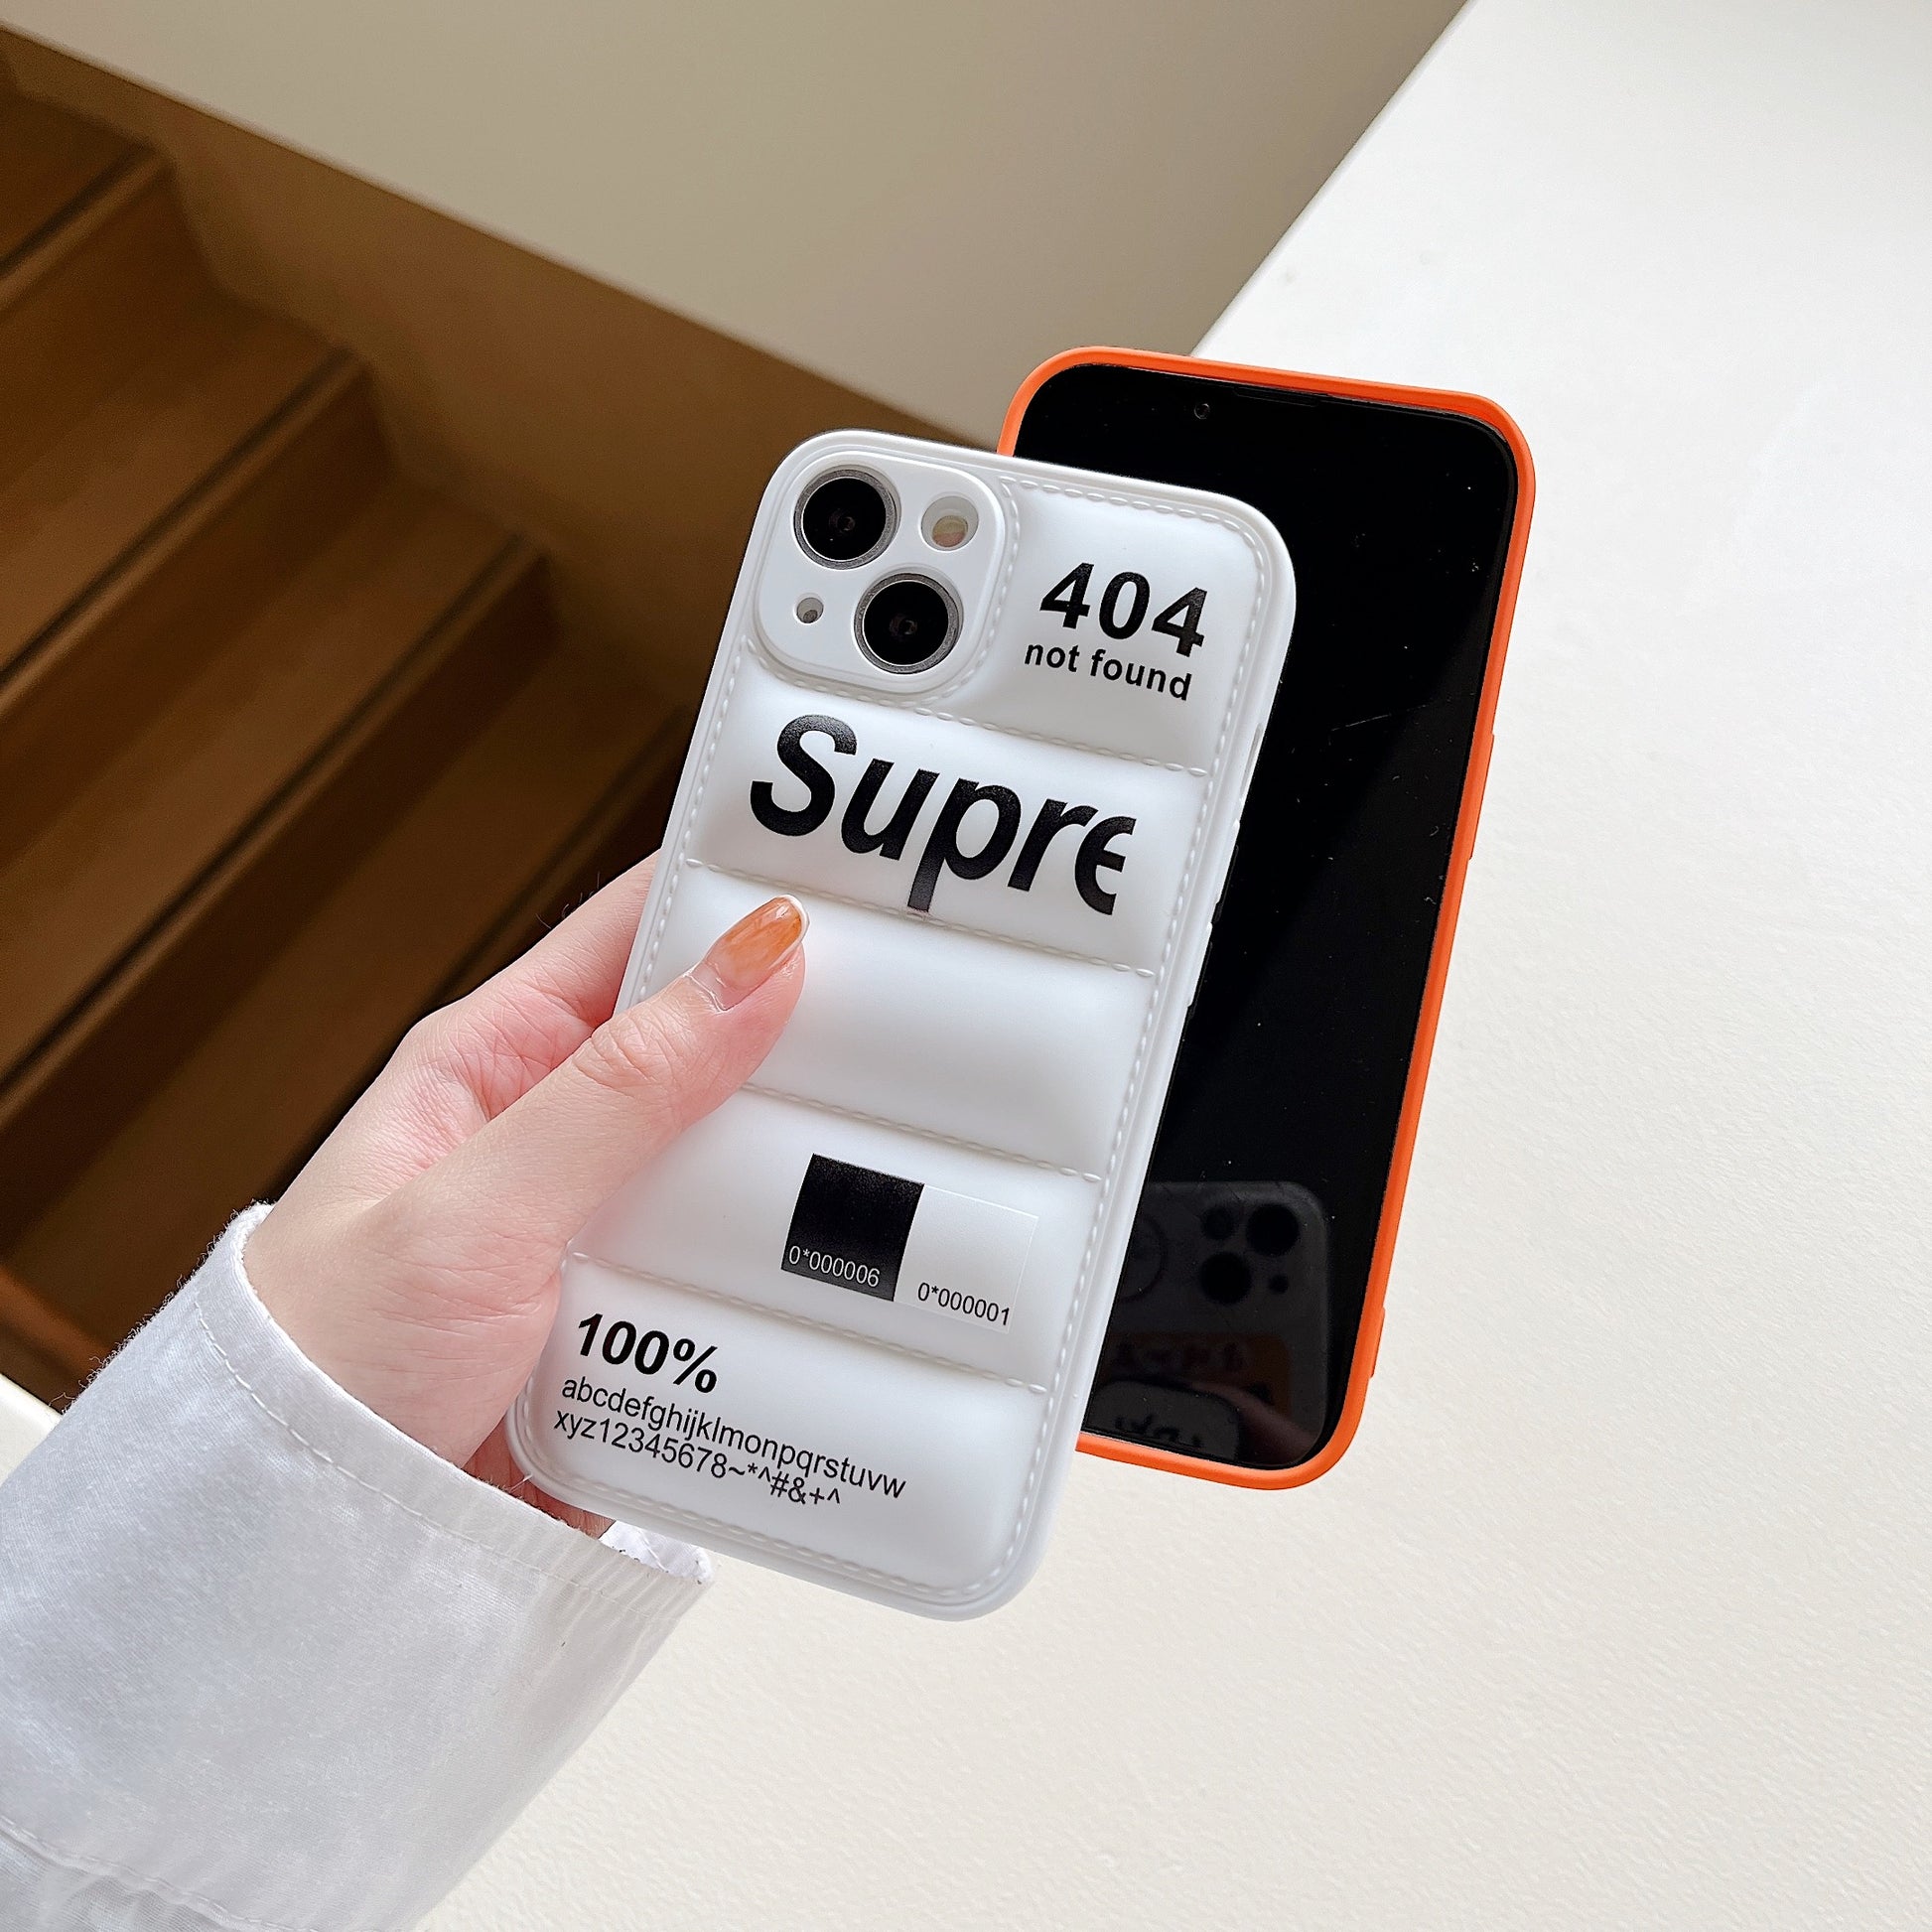 Supreme iphone case 